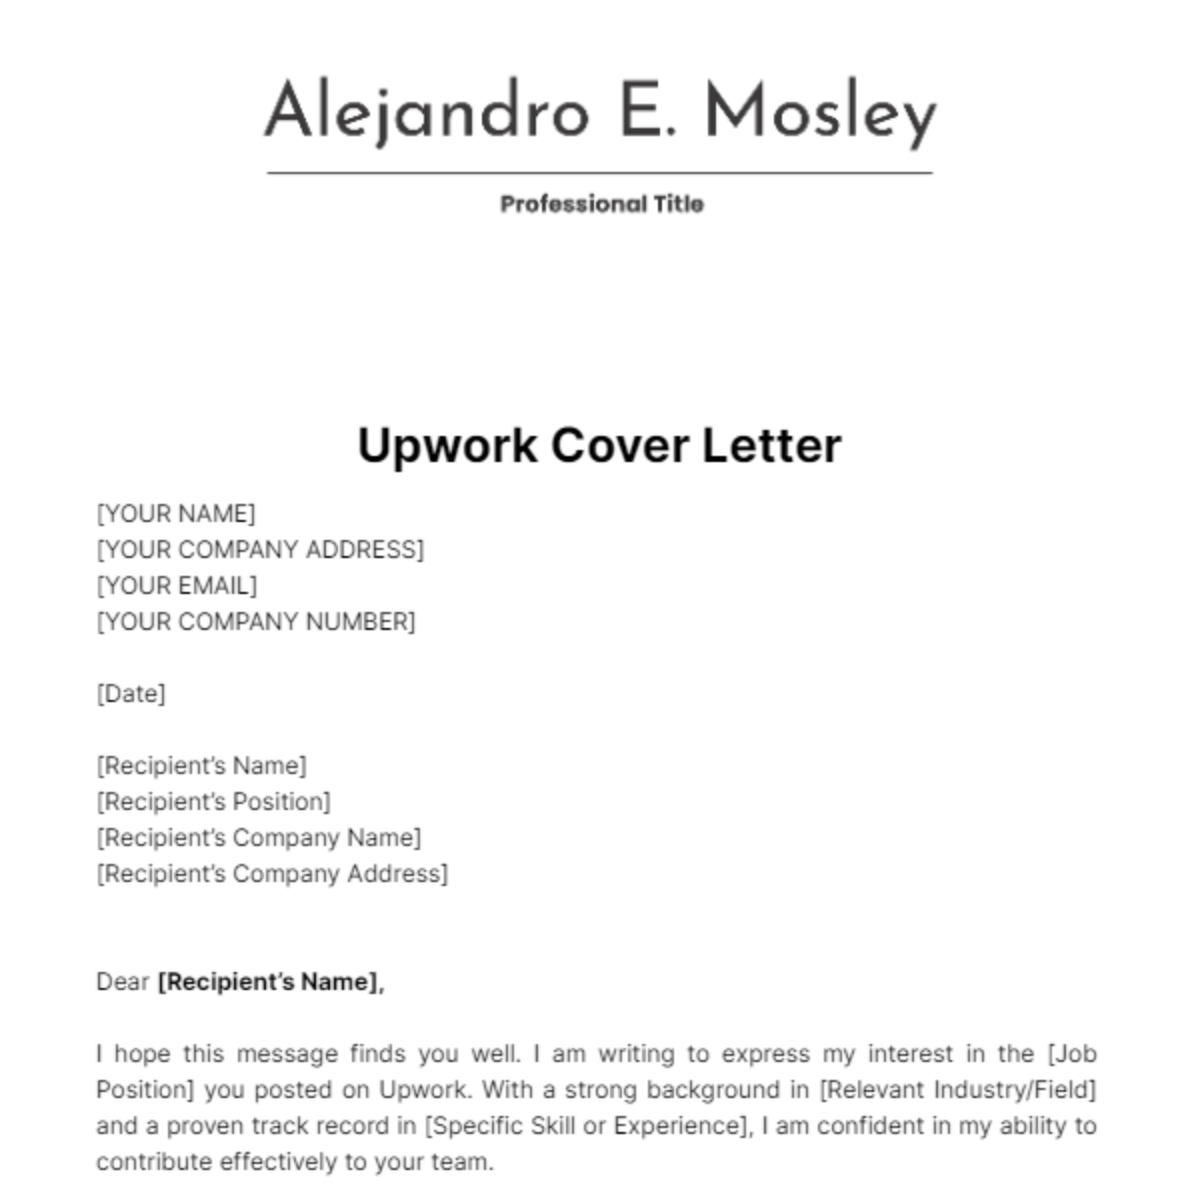 Upwork Cover Letter Template